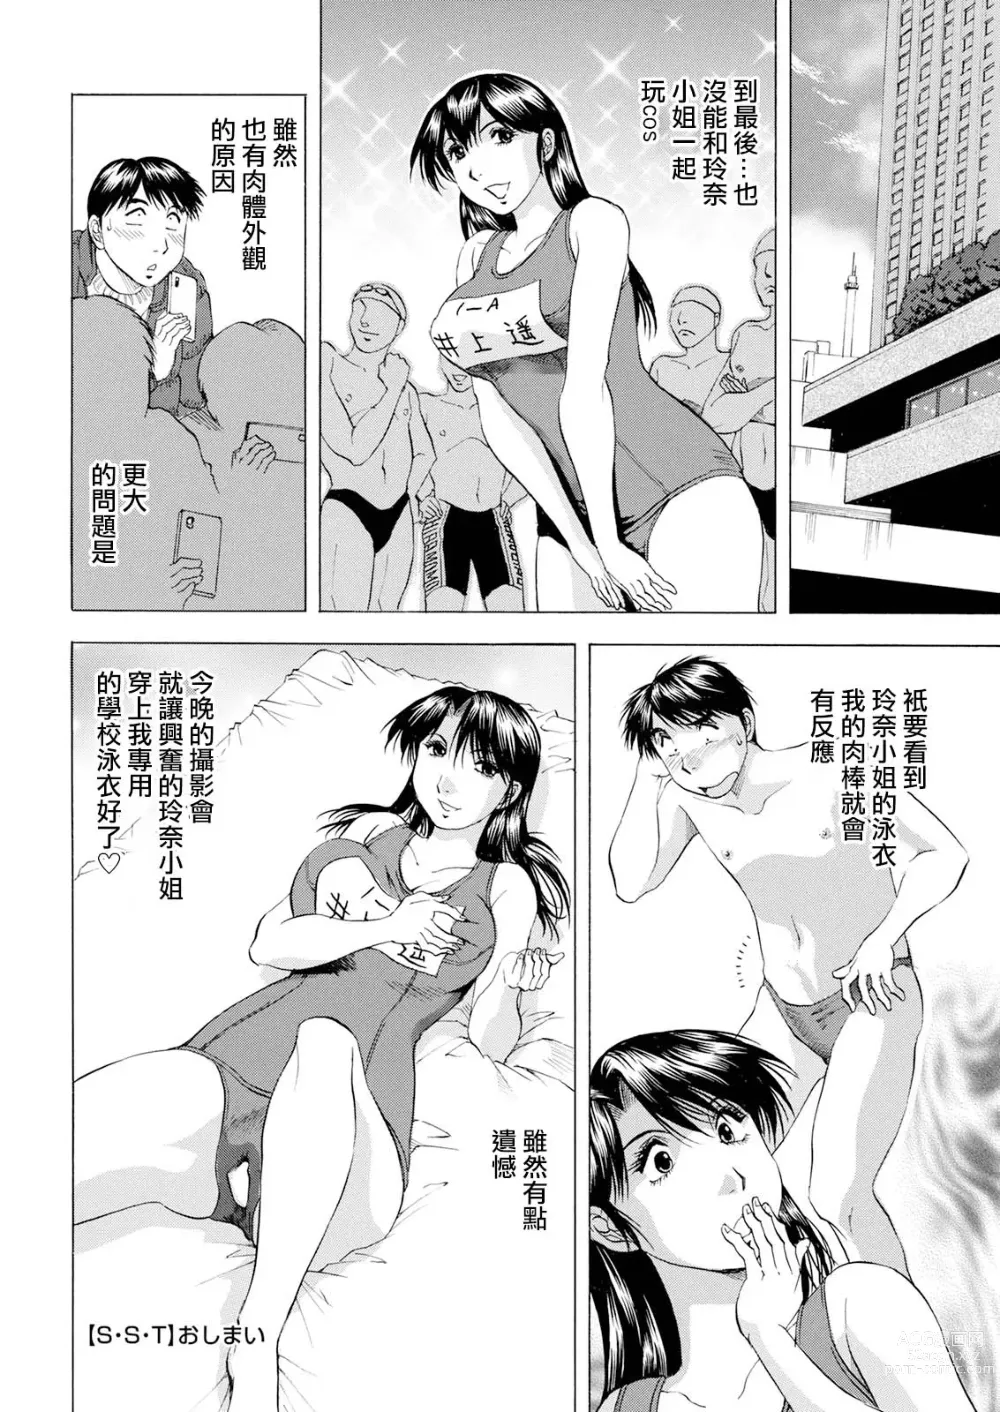 Page 20 of manga S.S.T